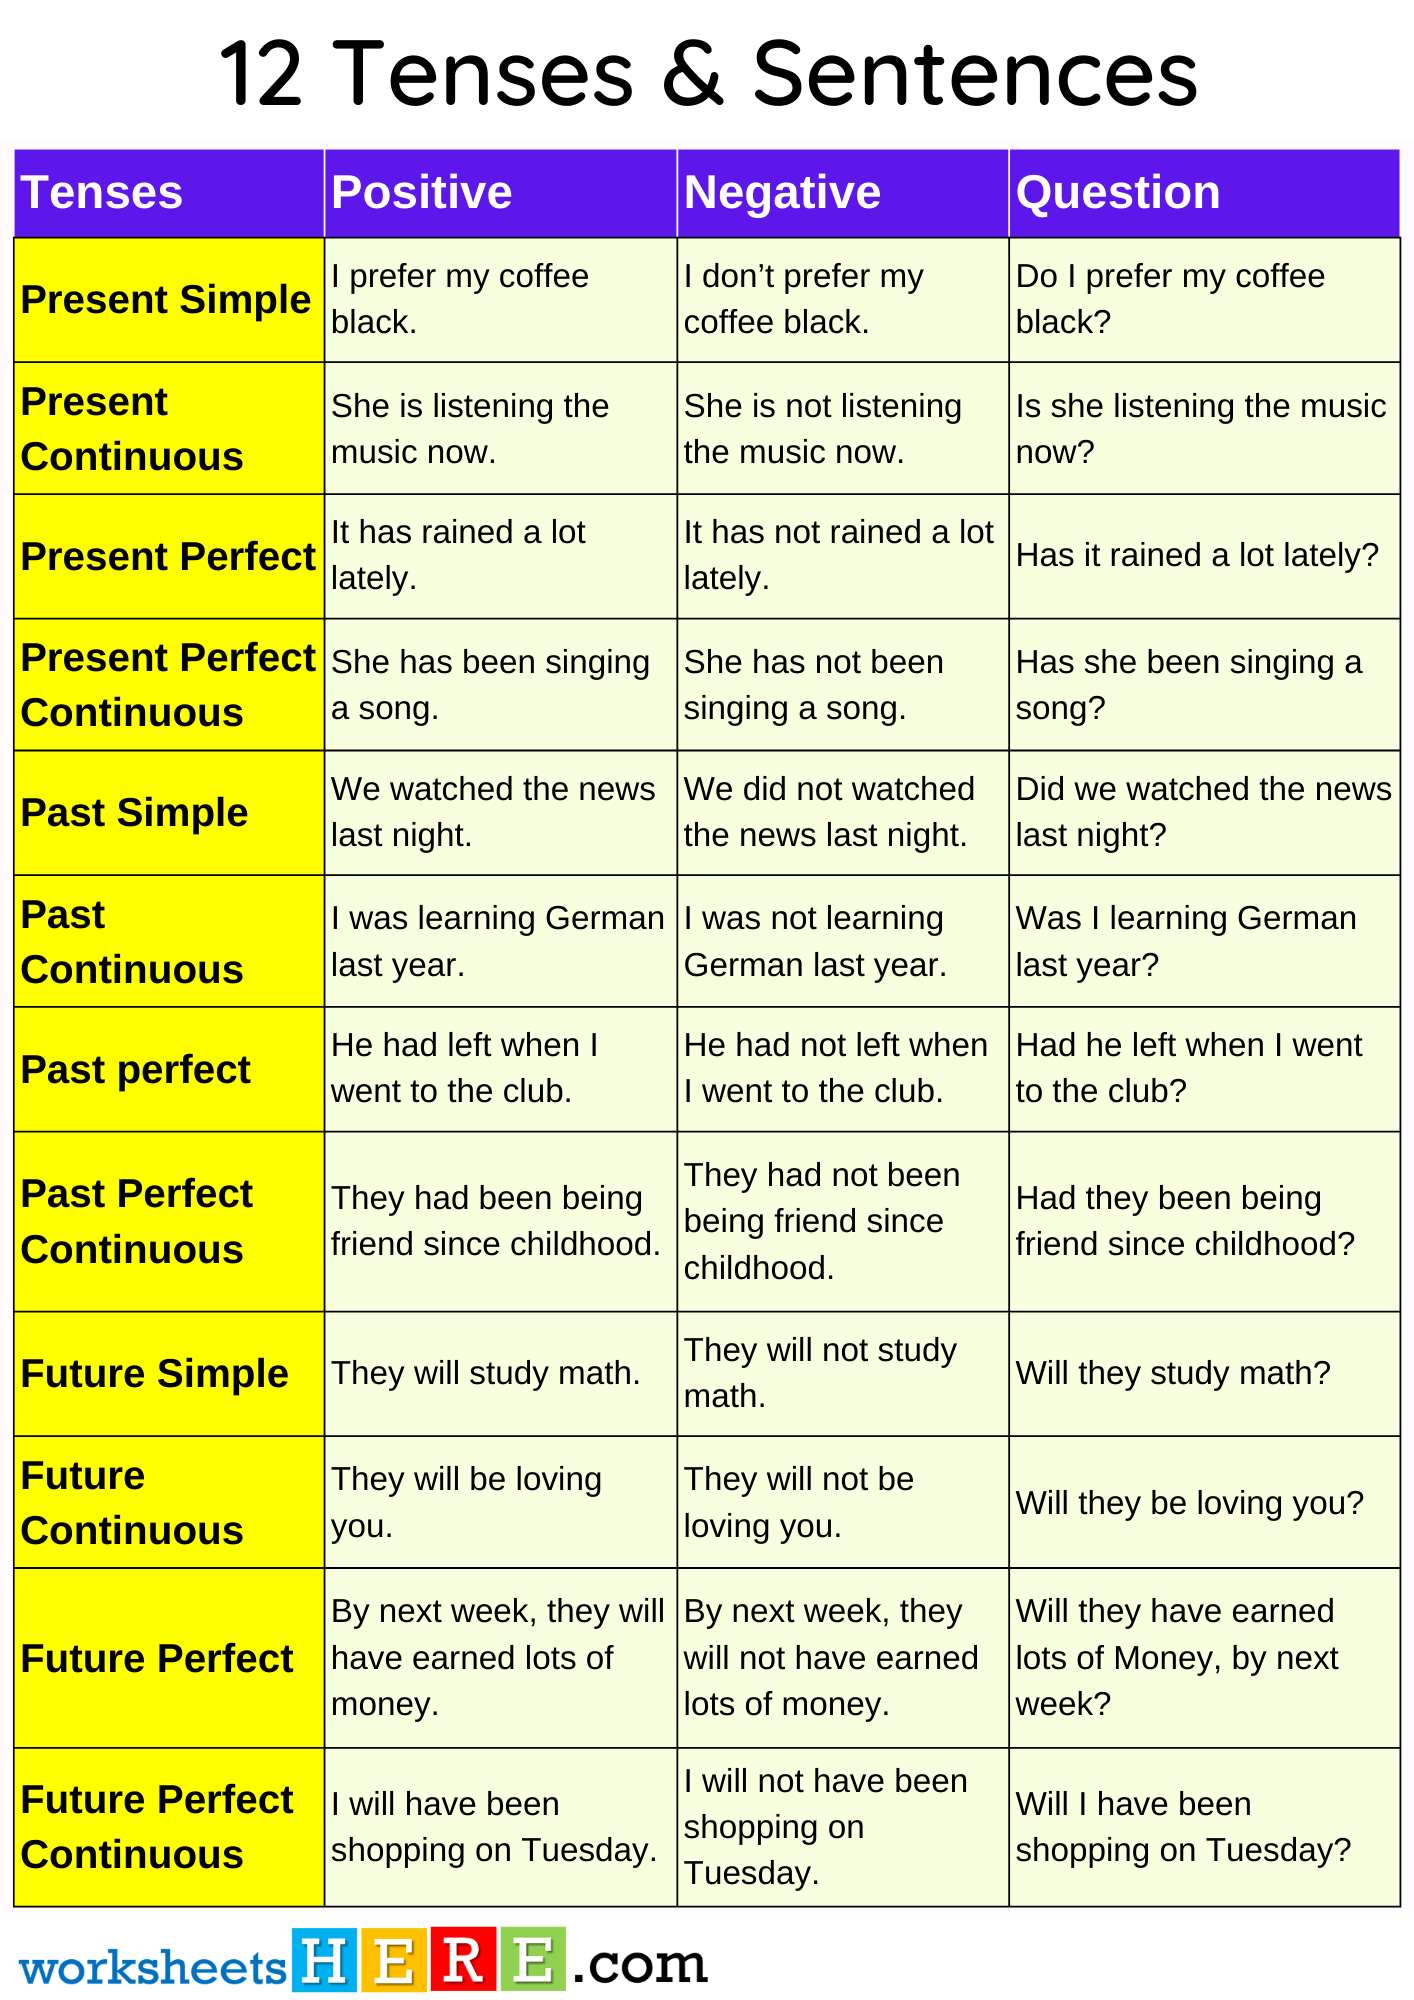 12 Tenses, Positive, Negative and Question Forms Sentences PDF Worksheet